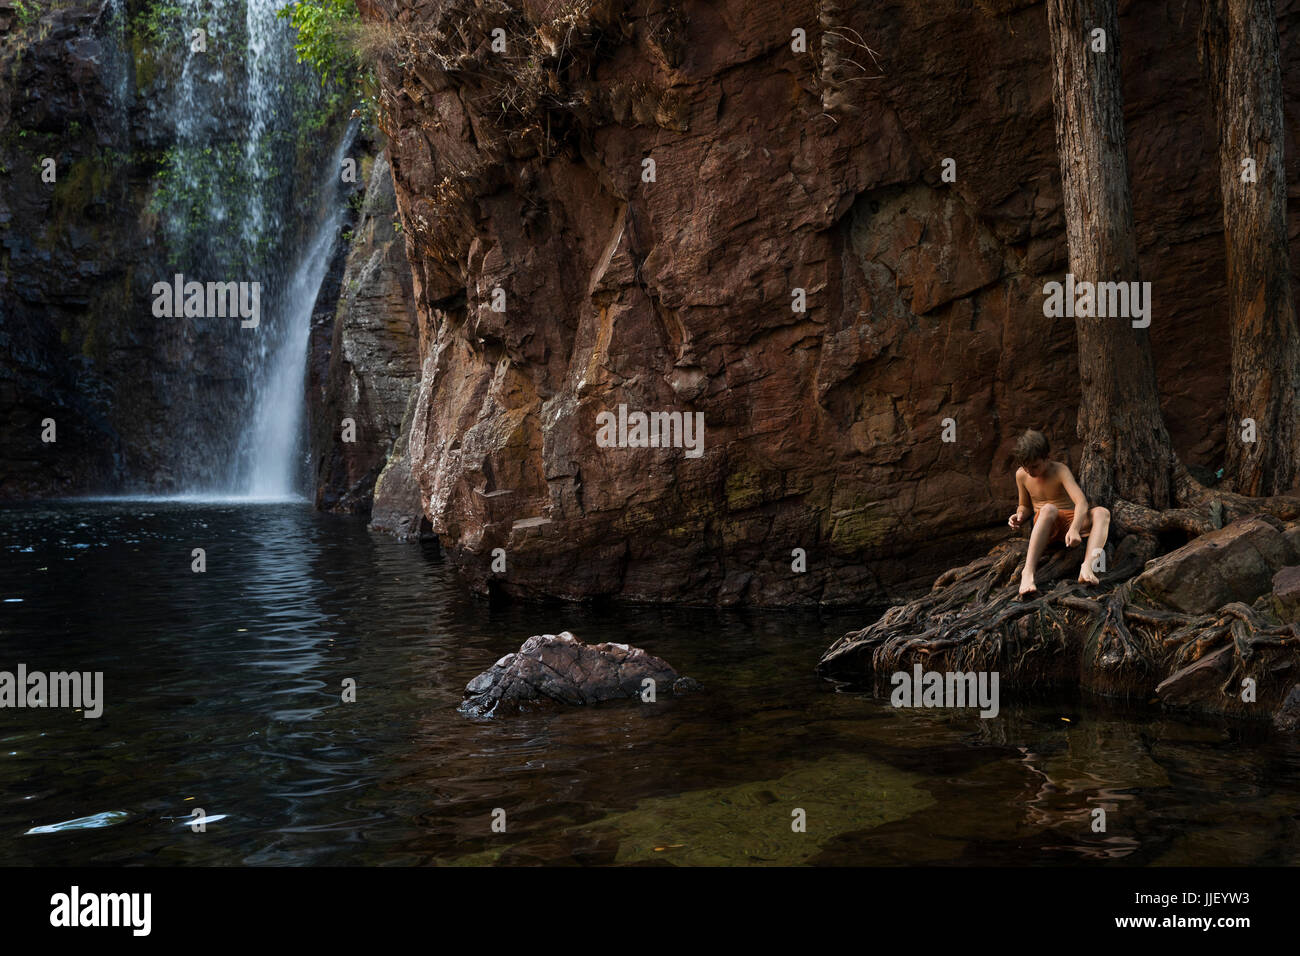 Boy sitting by a waterfall, Western Australia, Australia Stock Photo